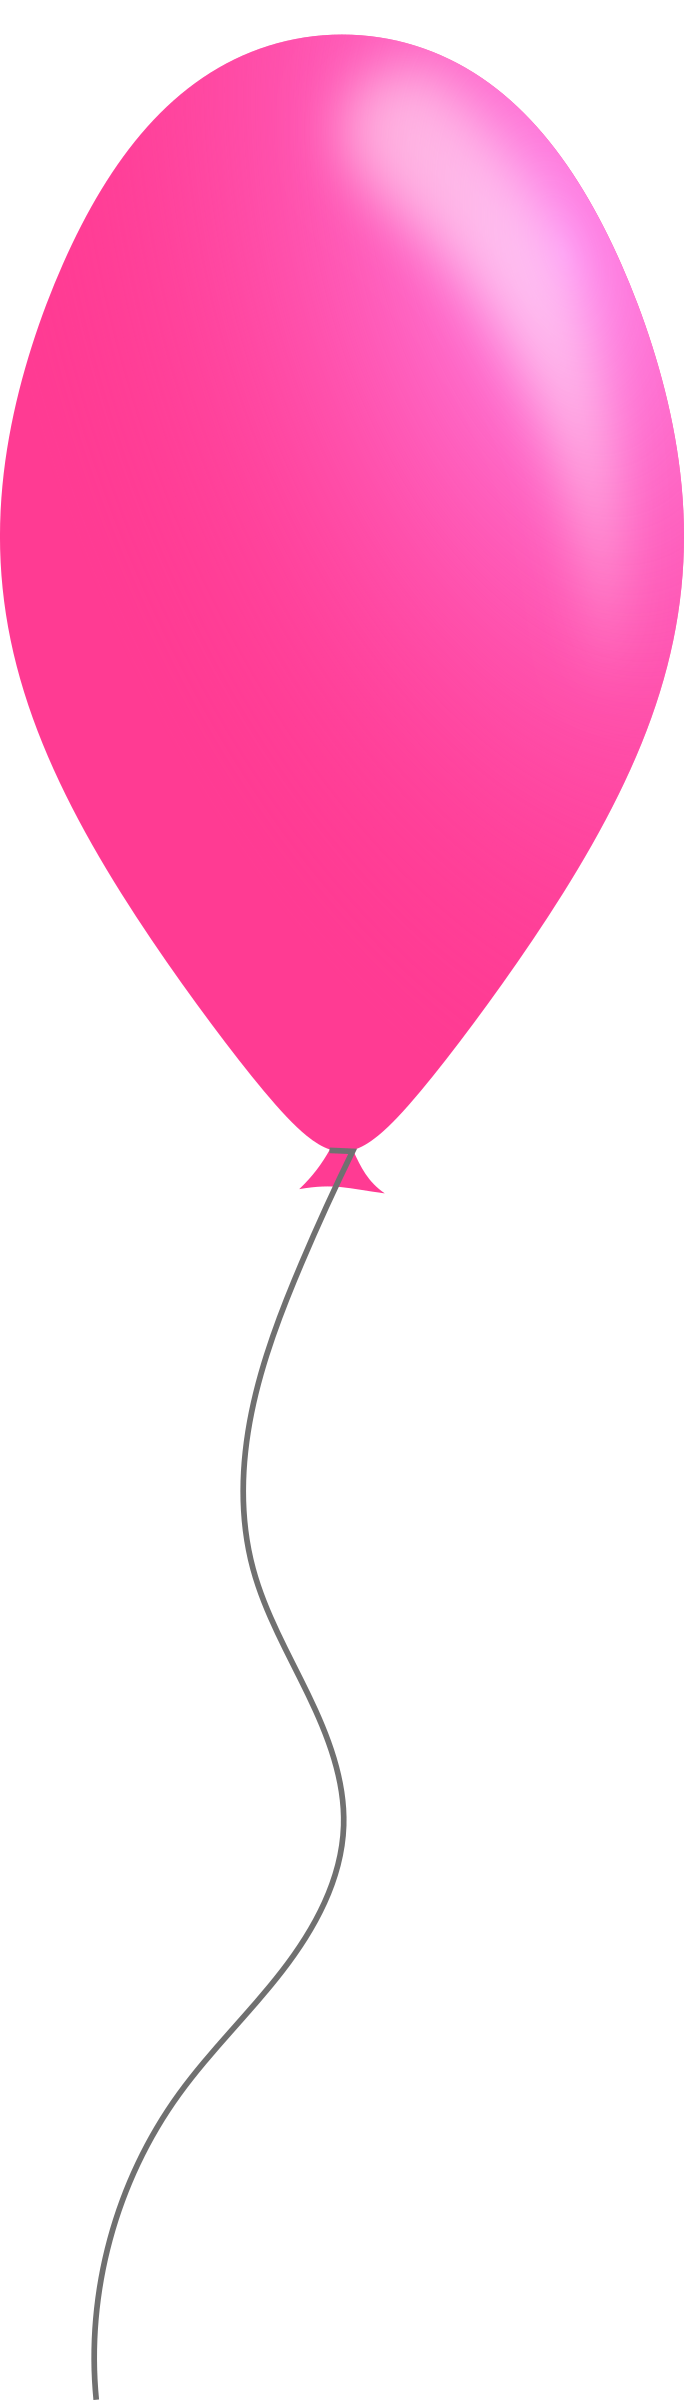 Big image png. Clipart balloon pink